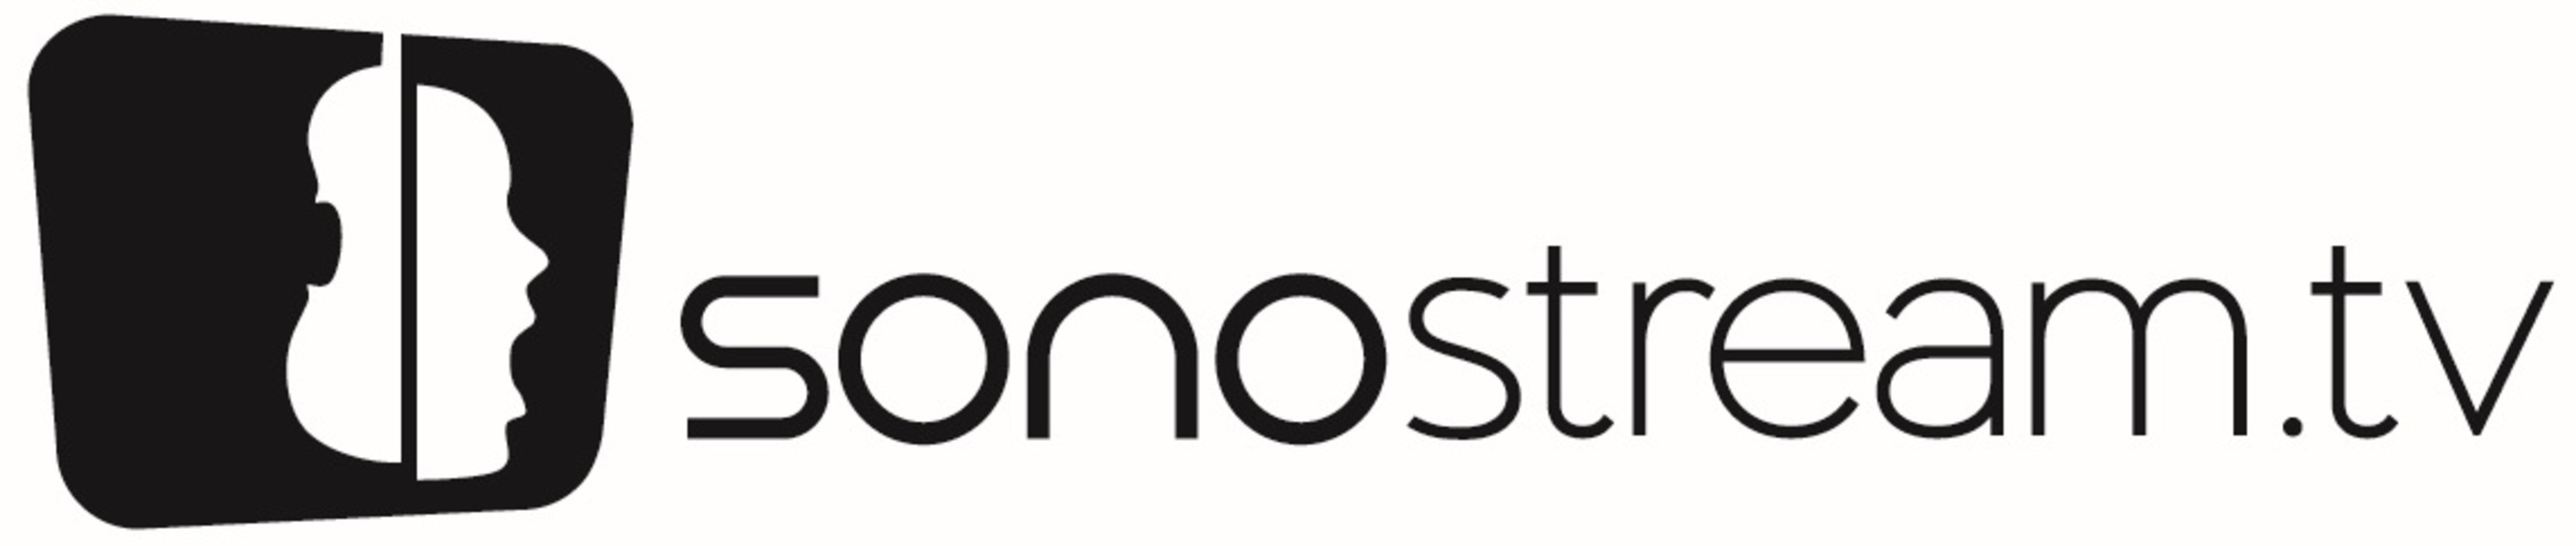 Sonostream.tv Logo (PRNewsFoto/Sonostream.tv)